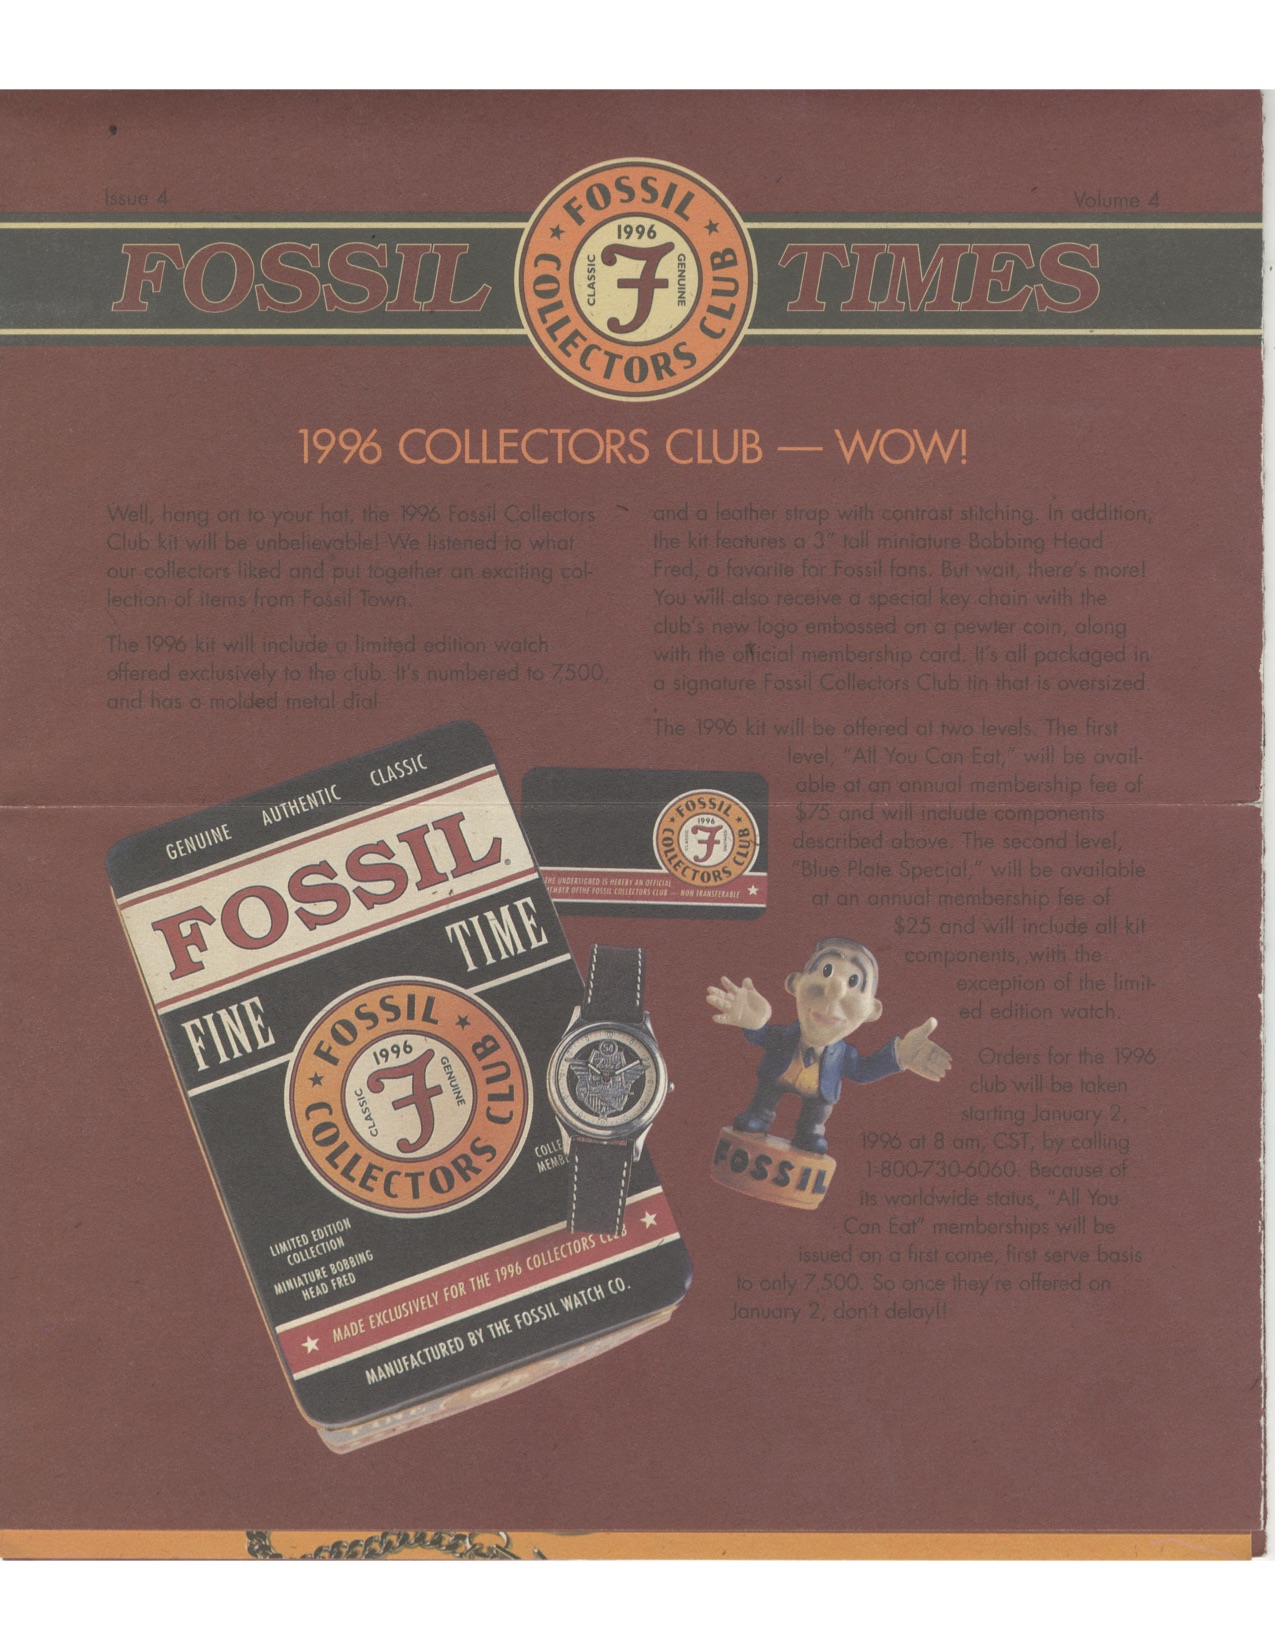 _1996_FossilTimes_V3_1_cover.jpg